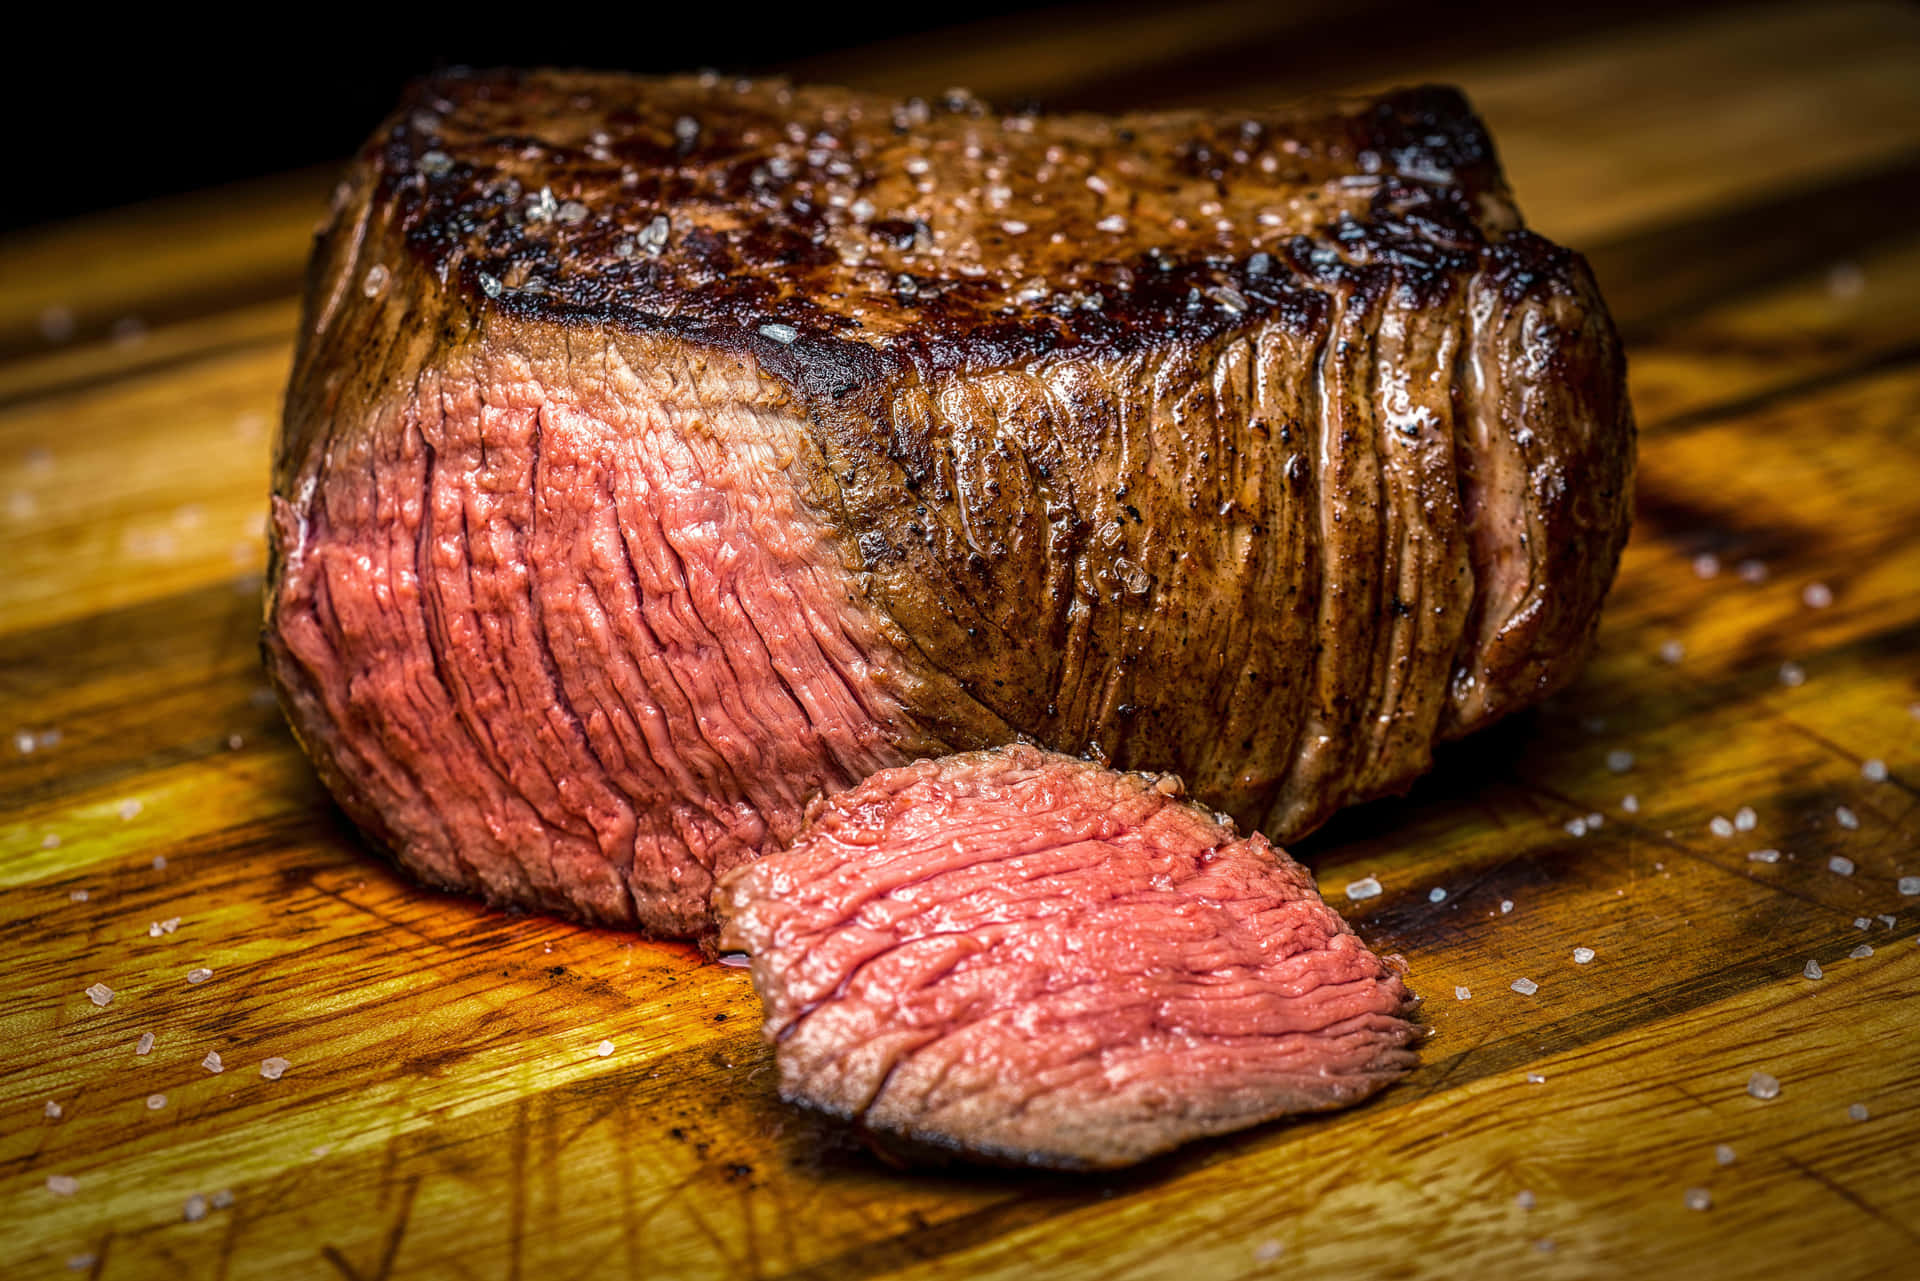 A Steak Is Sitting On A Wooden Cutting Board